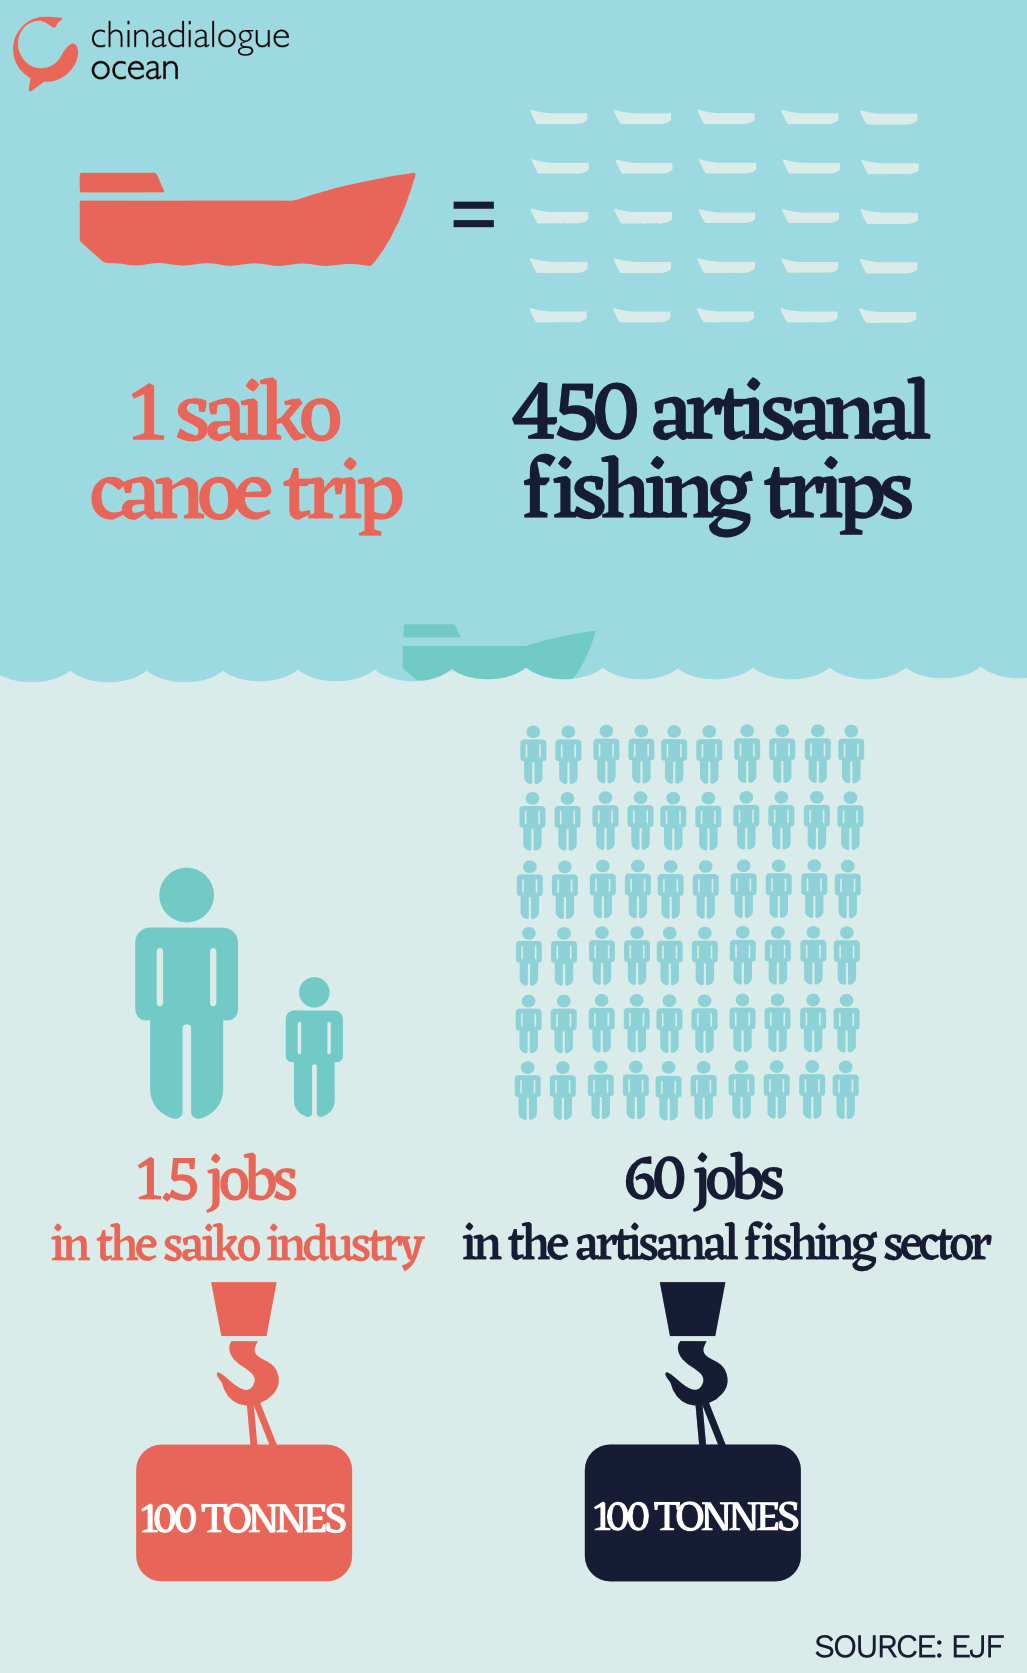 saiko versus artisanal fishing in ghana, jobs comparison